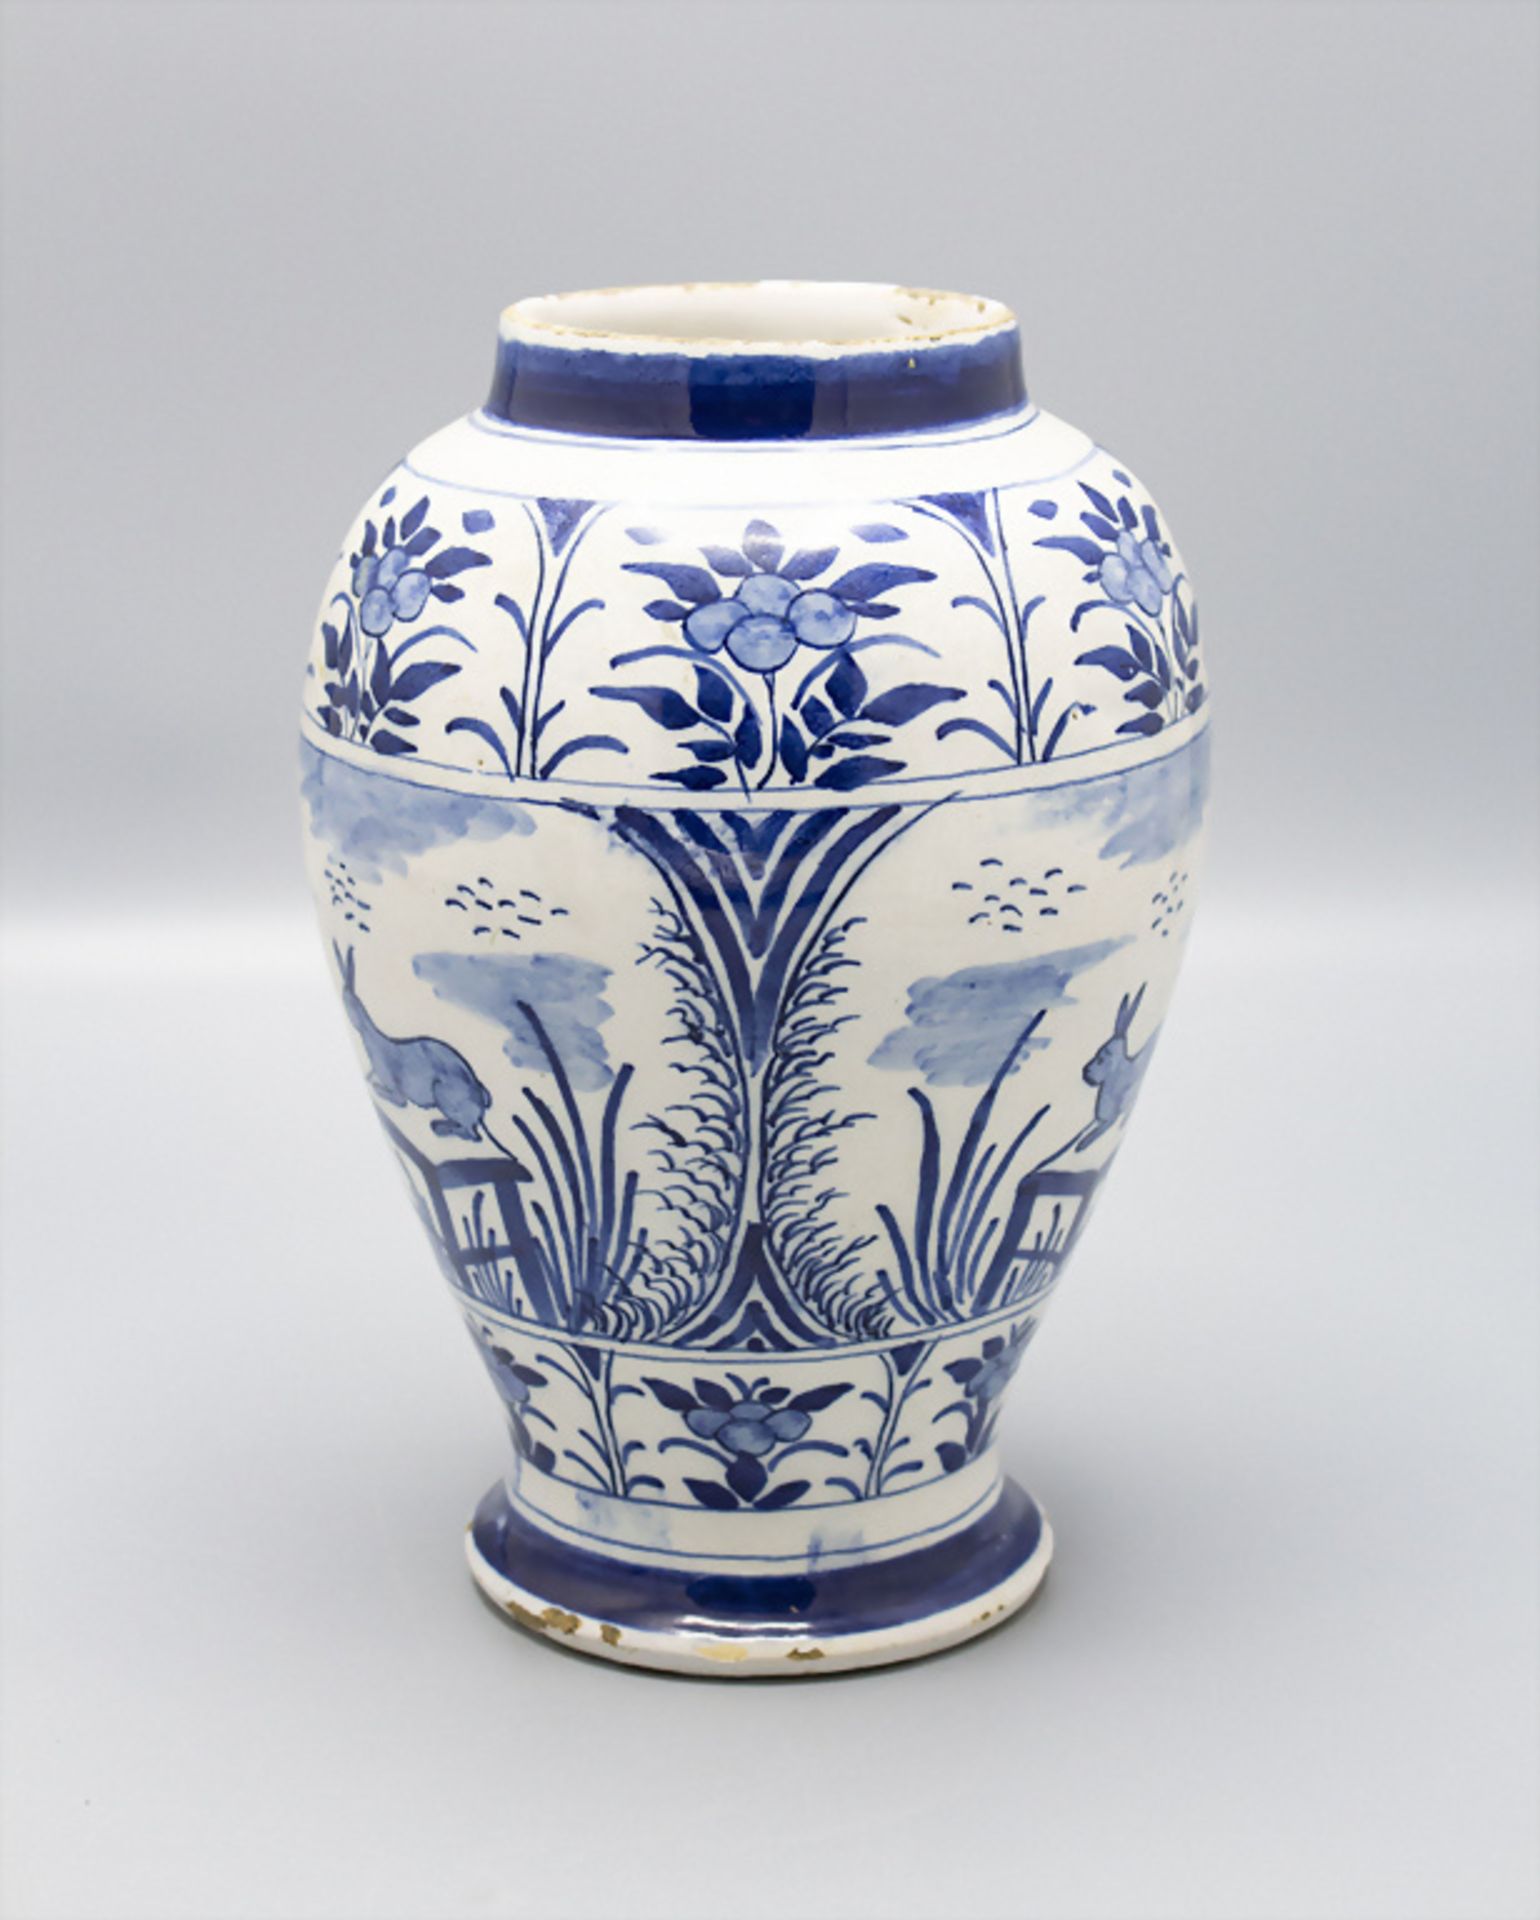 Fayence Vase mit Hasen Dekor / A fayence vase with rabbit decor, 18./19. Jh - Image 2 of 5